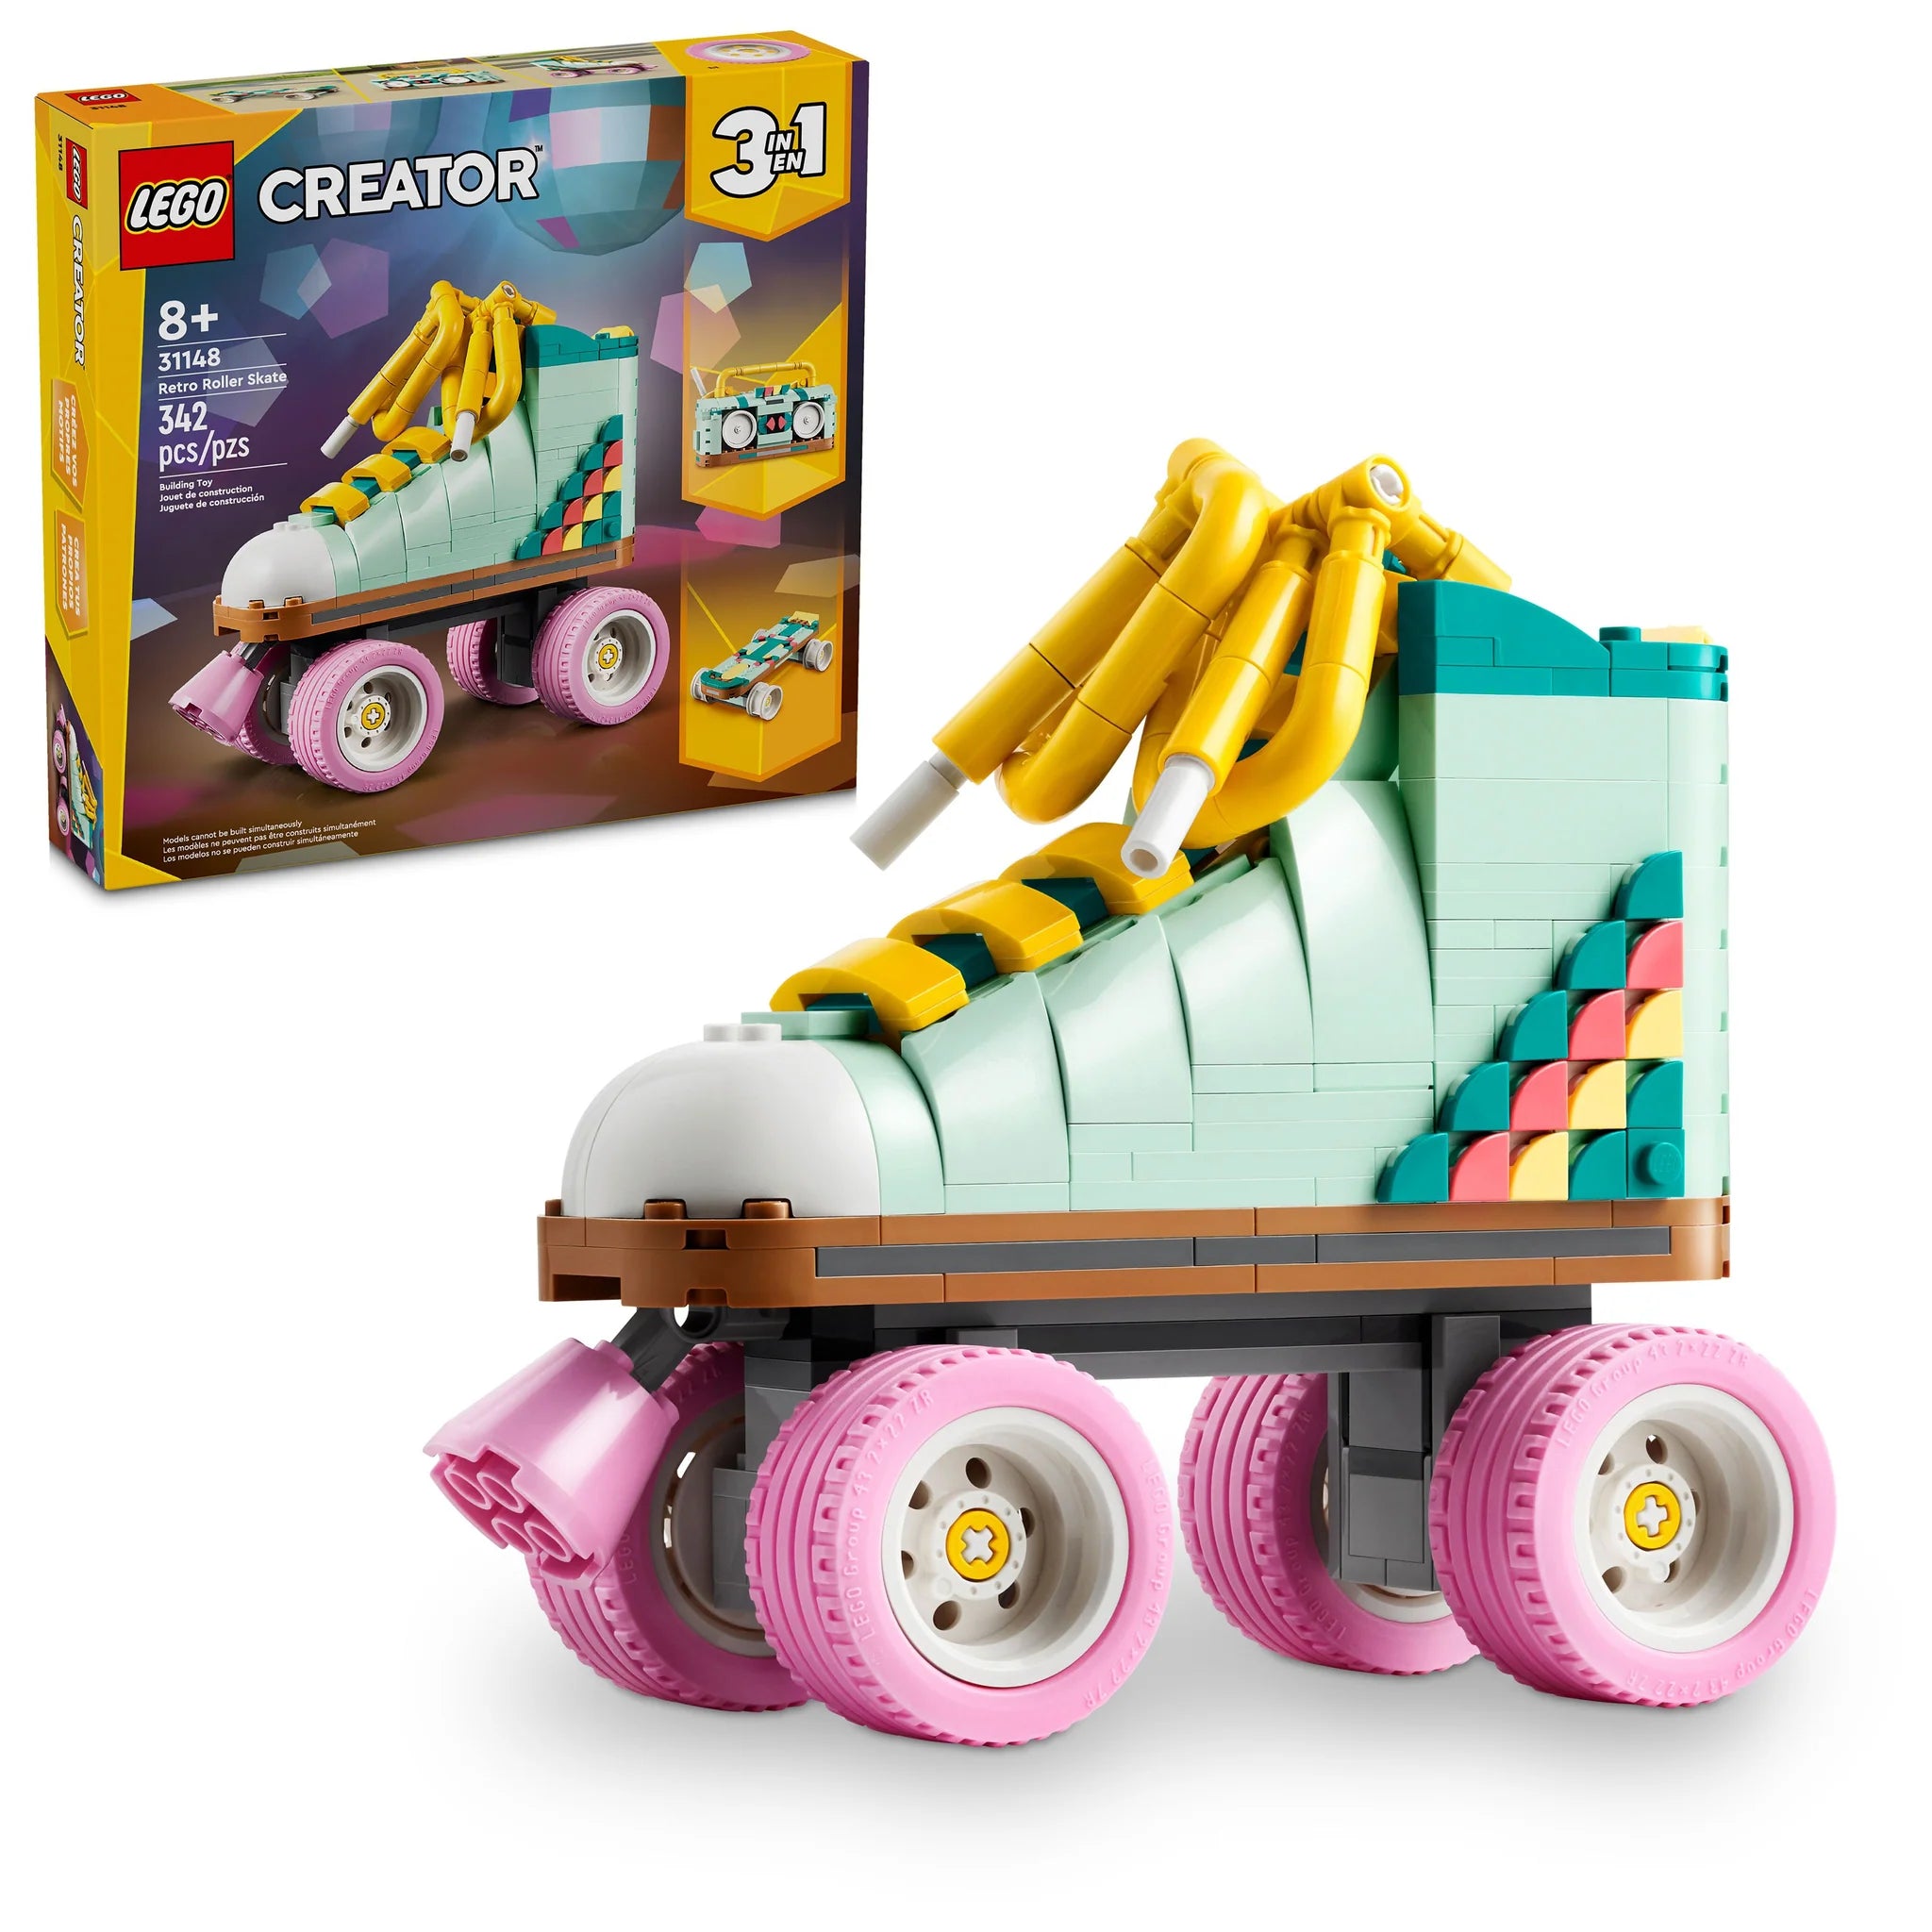 LEGO Creator Retro Roller Skate Building Toy Set (31148)